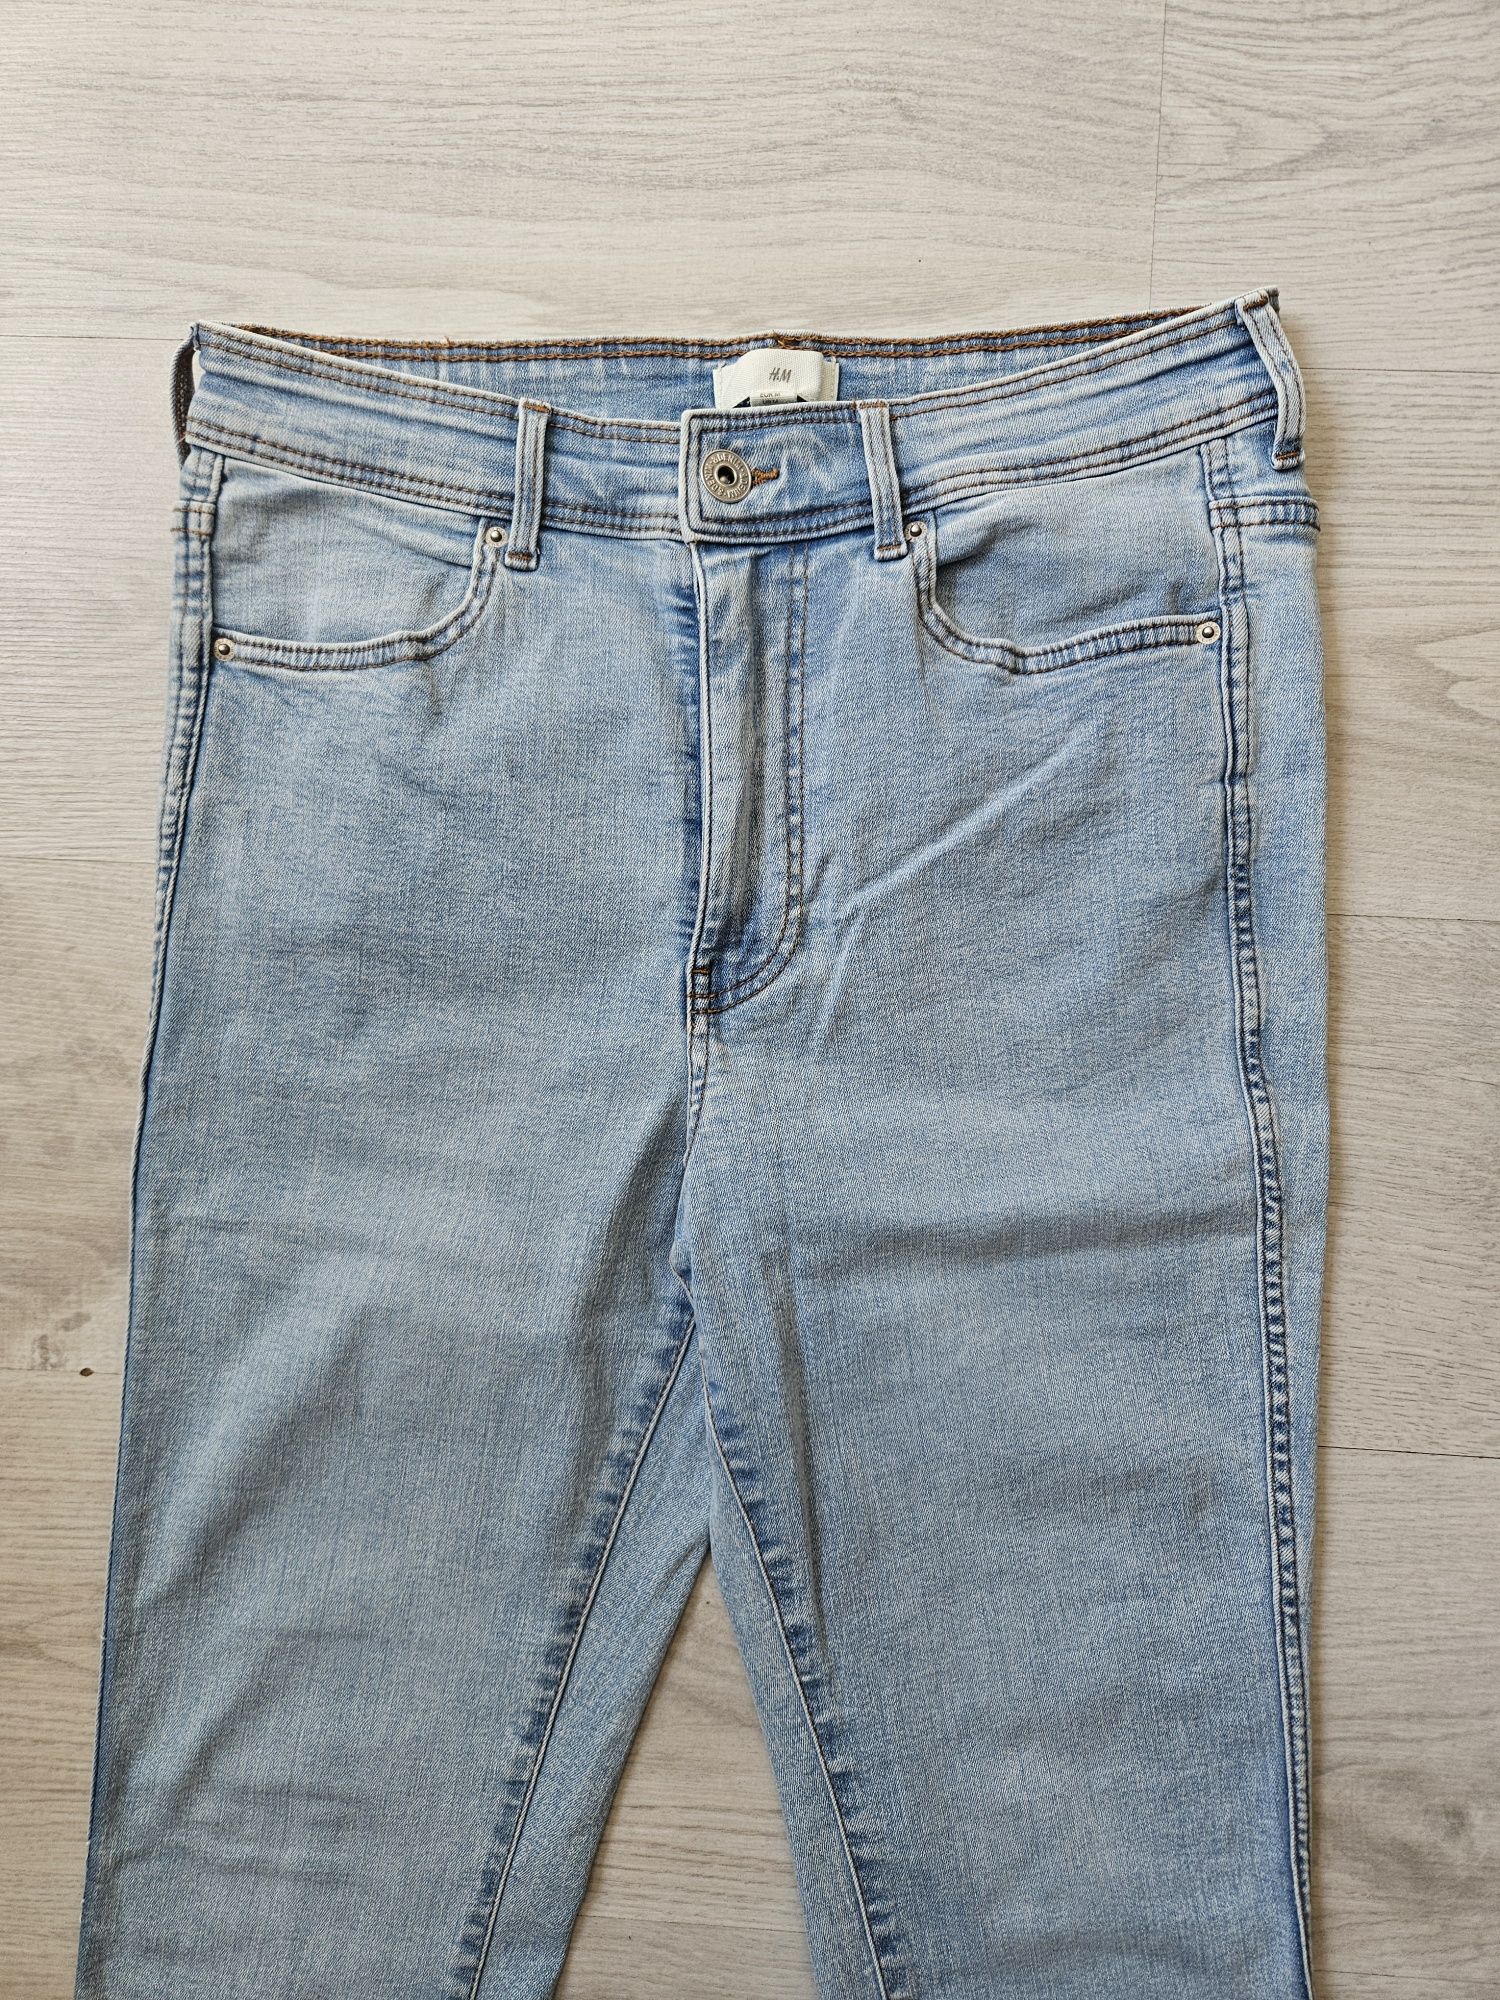 Spodnie damskie H&M jeans rurki skinny r 38